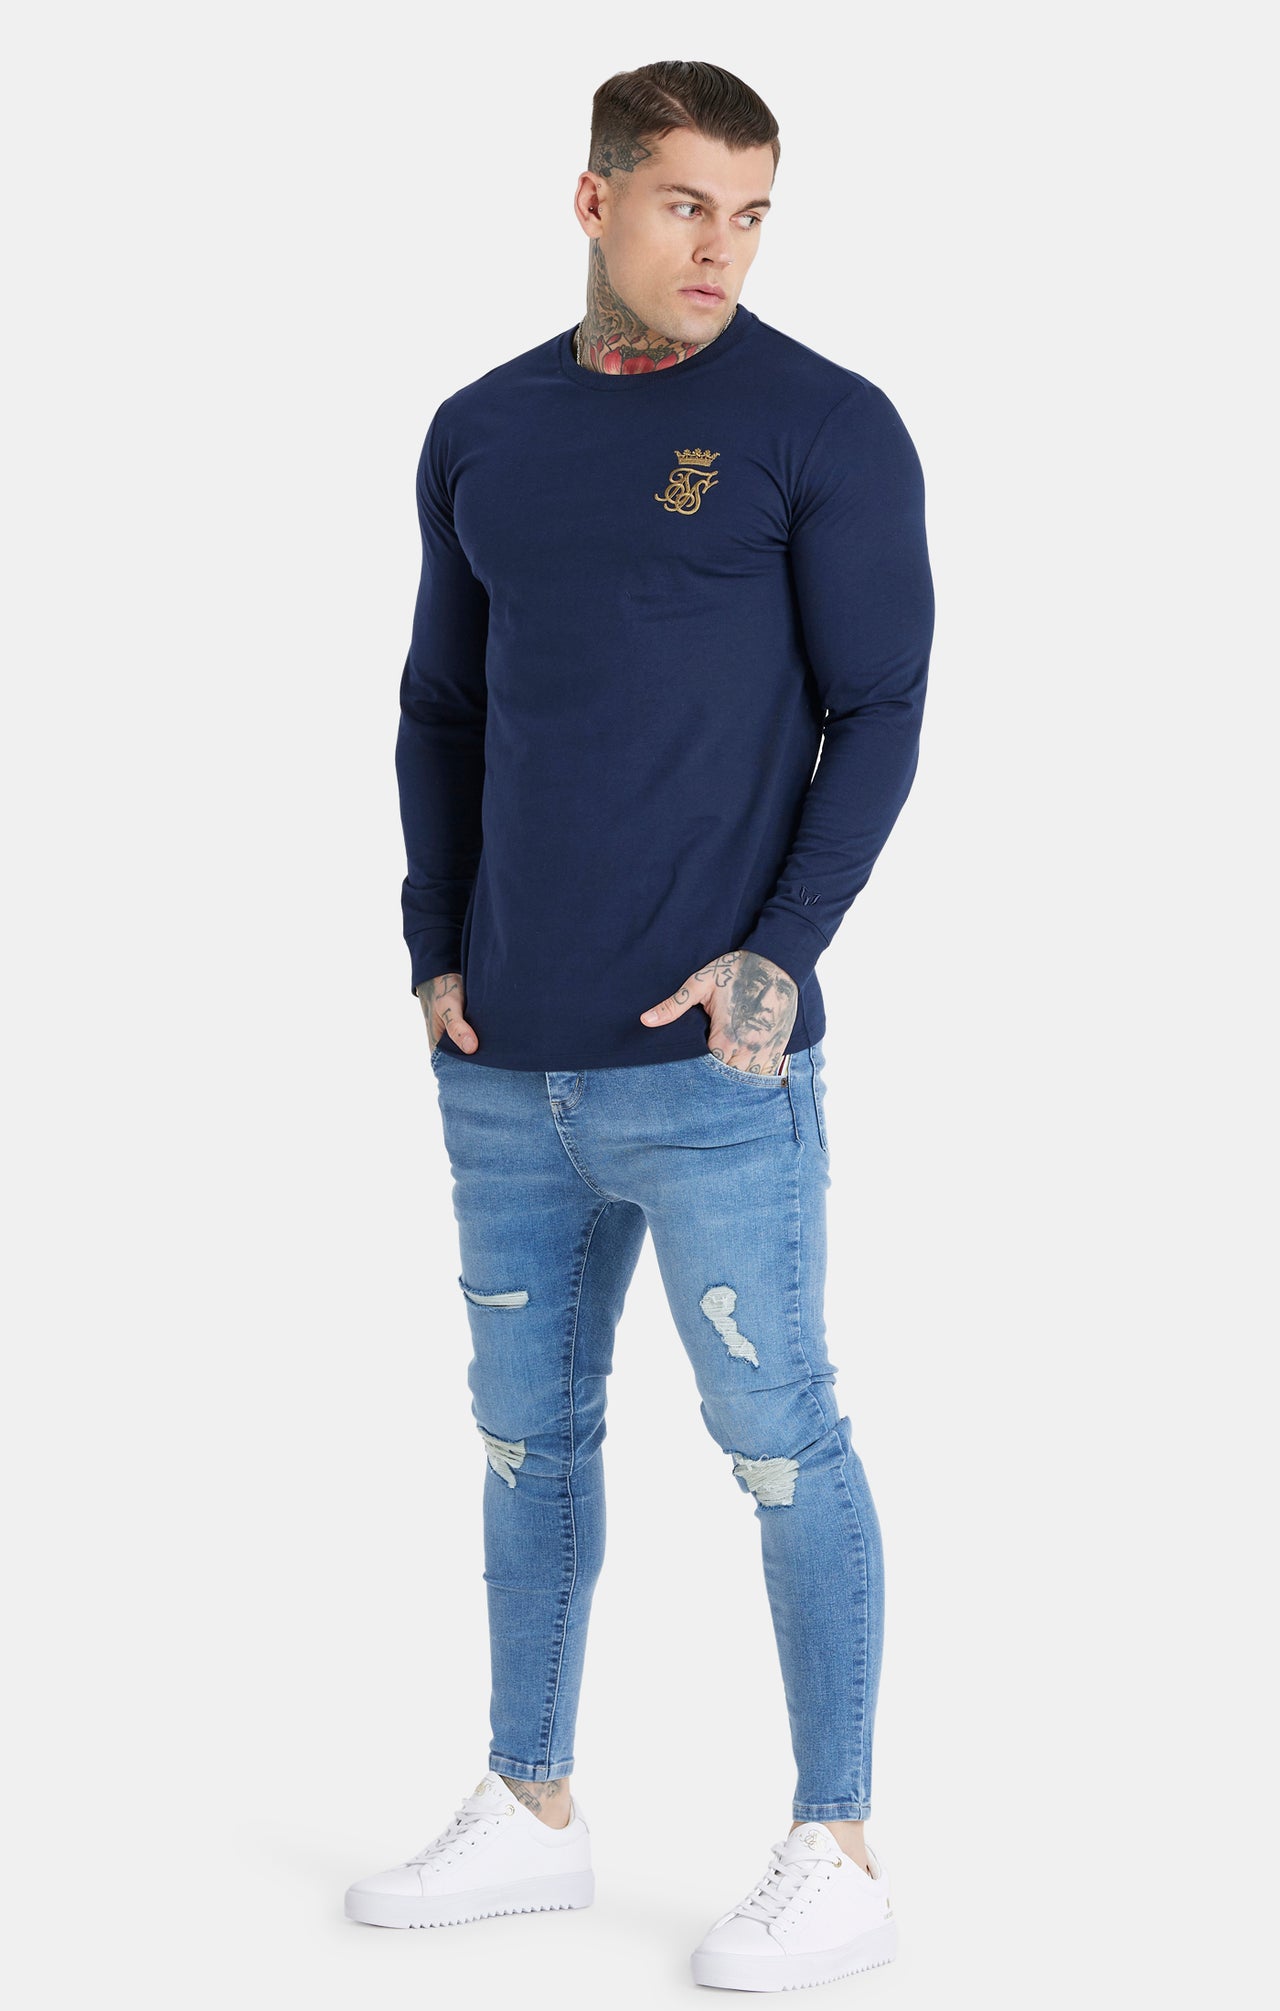 Messi x SikSilk Navy Long Sleeve T-Shirt (3)